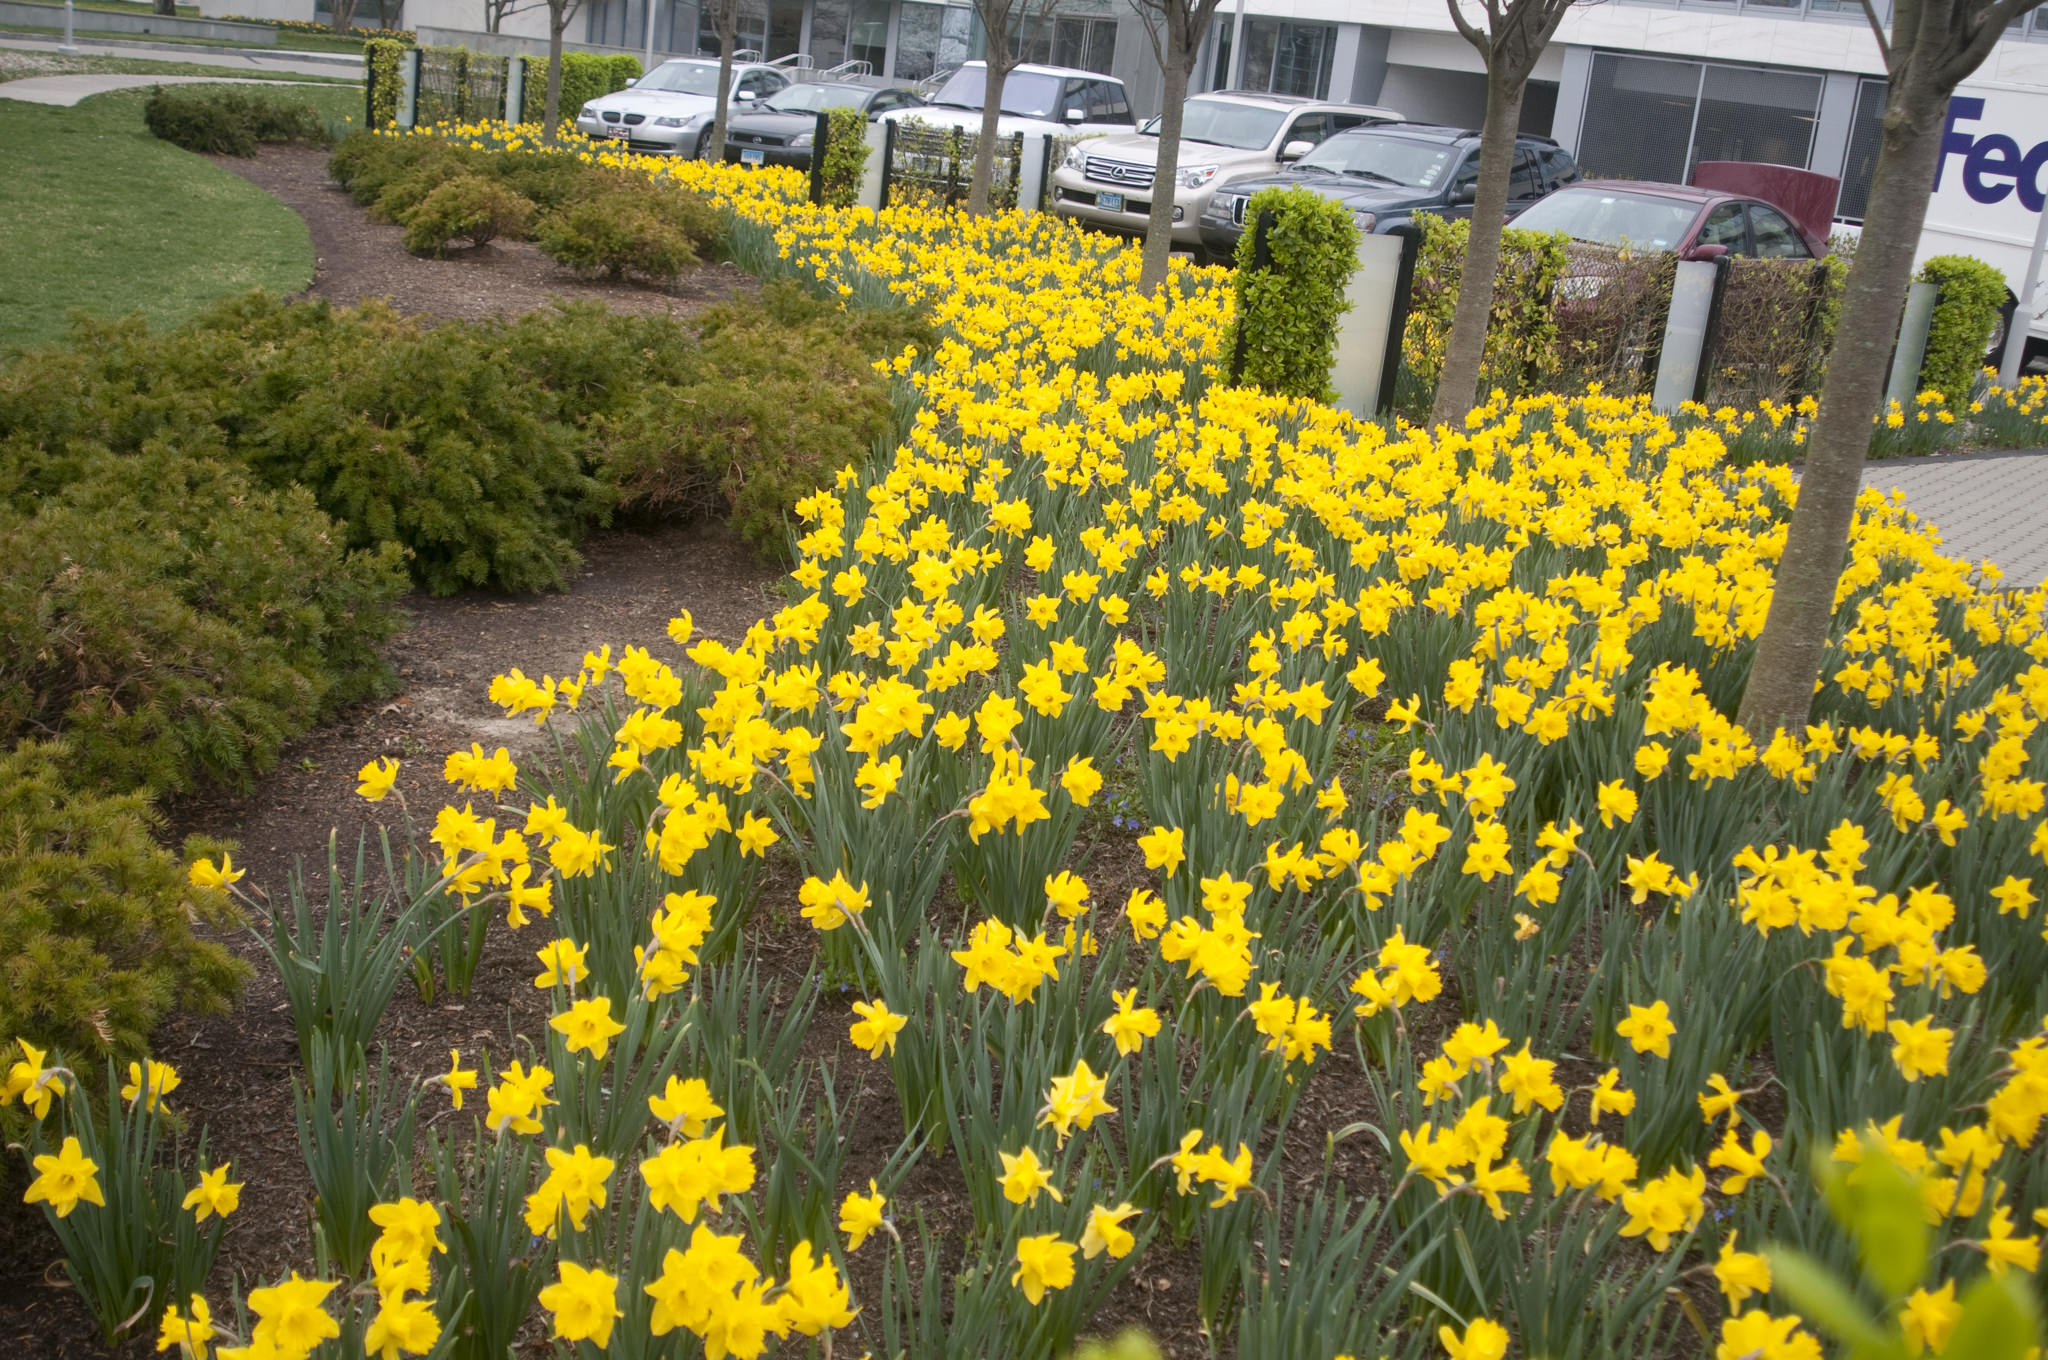 Yellow trumpet daffodils